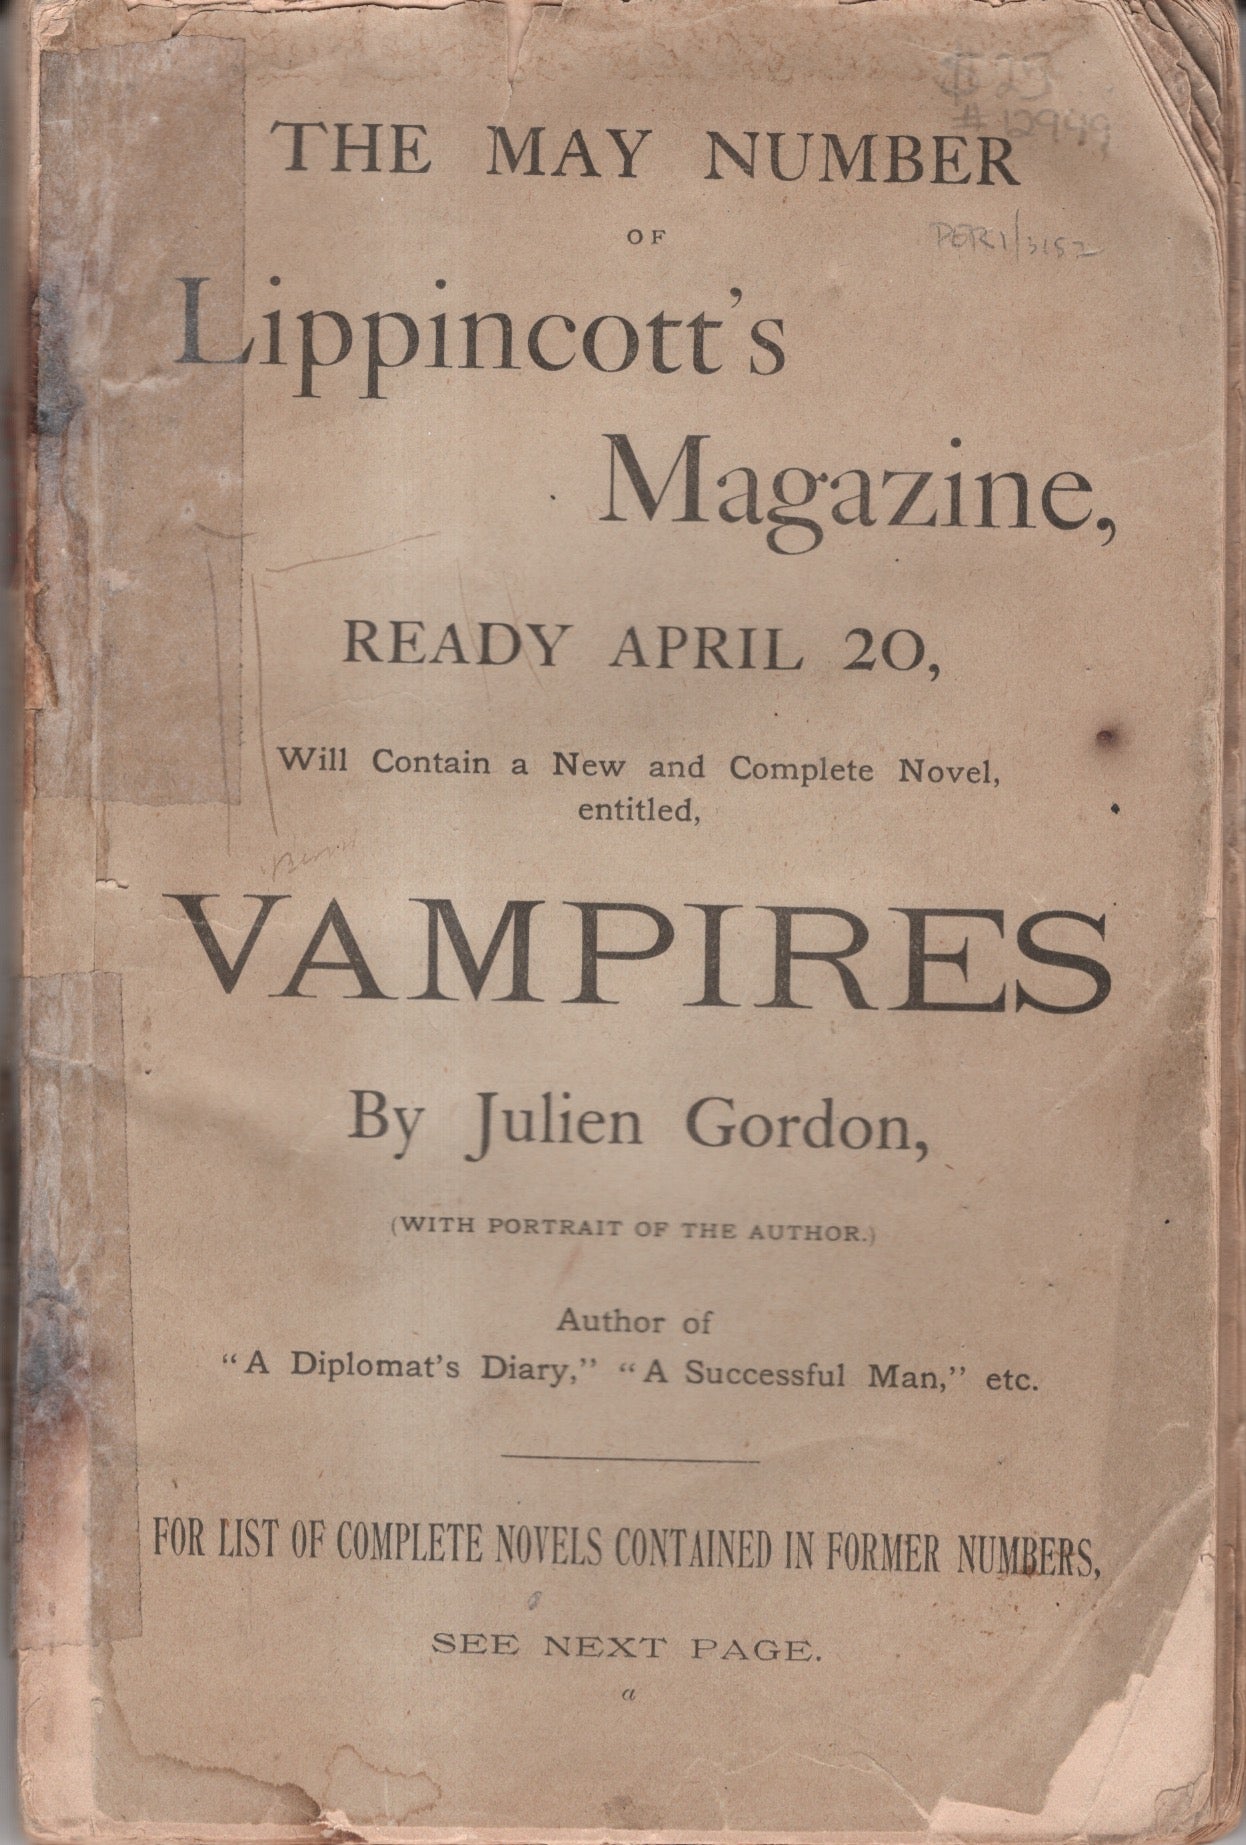 Magazine.　Monthly　Olney　Lippincott's　Ellen　Maidens　Choosing　1891.　April,　Kirk